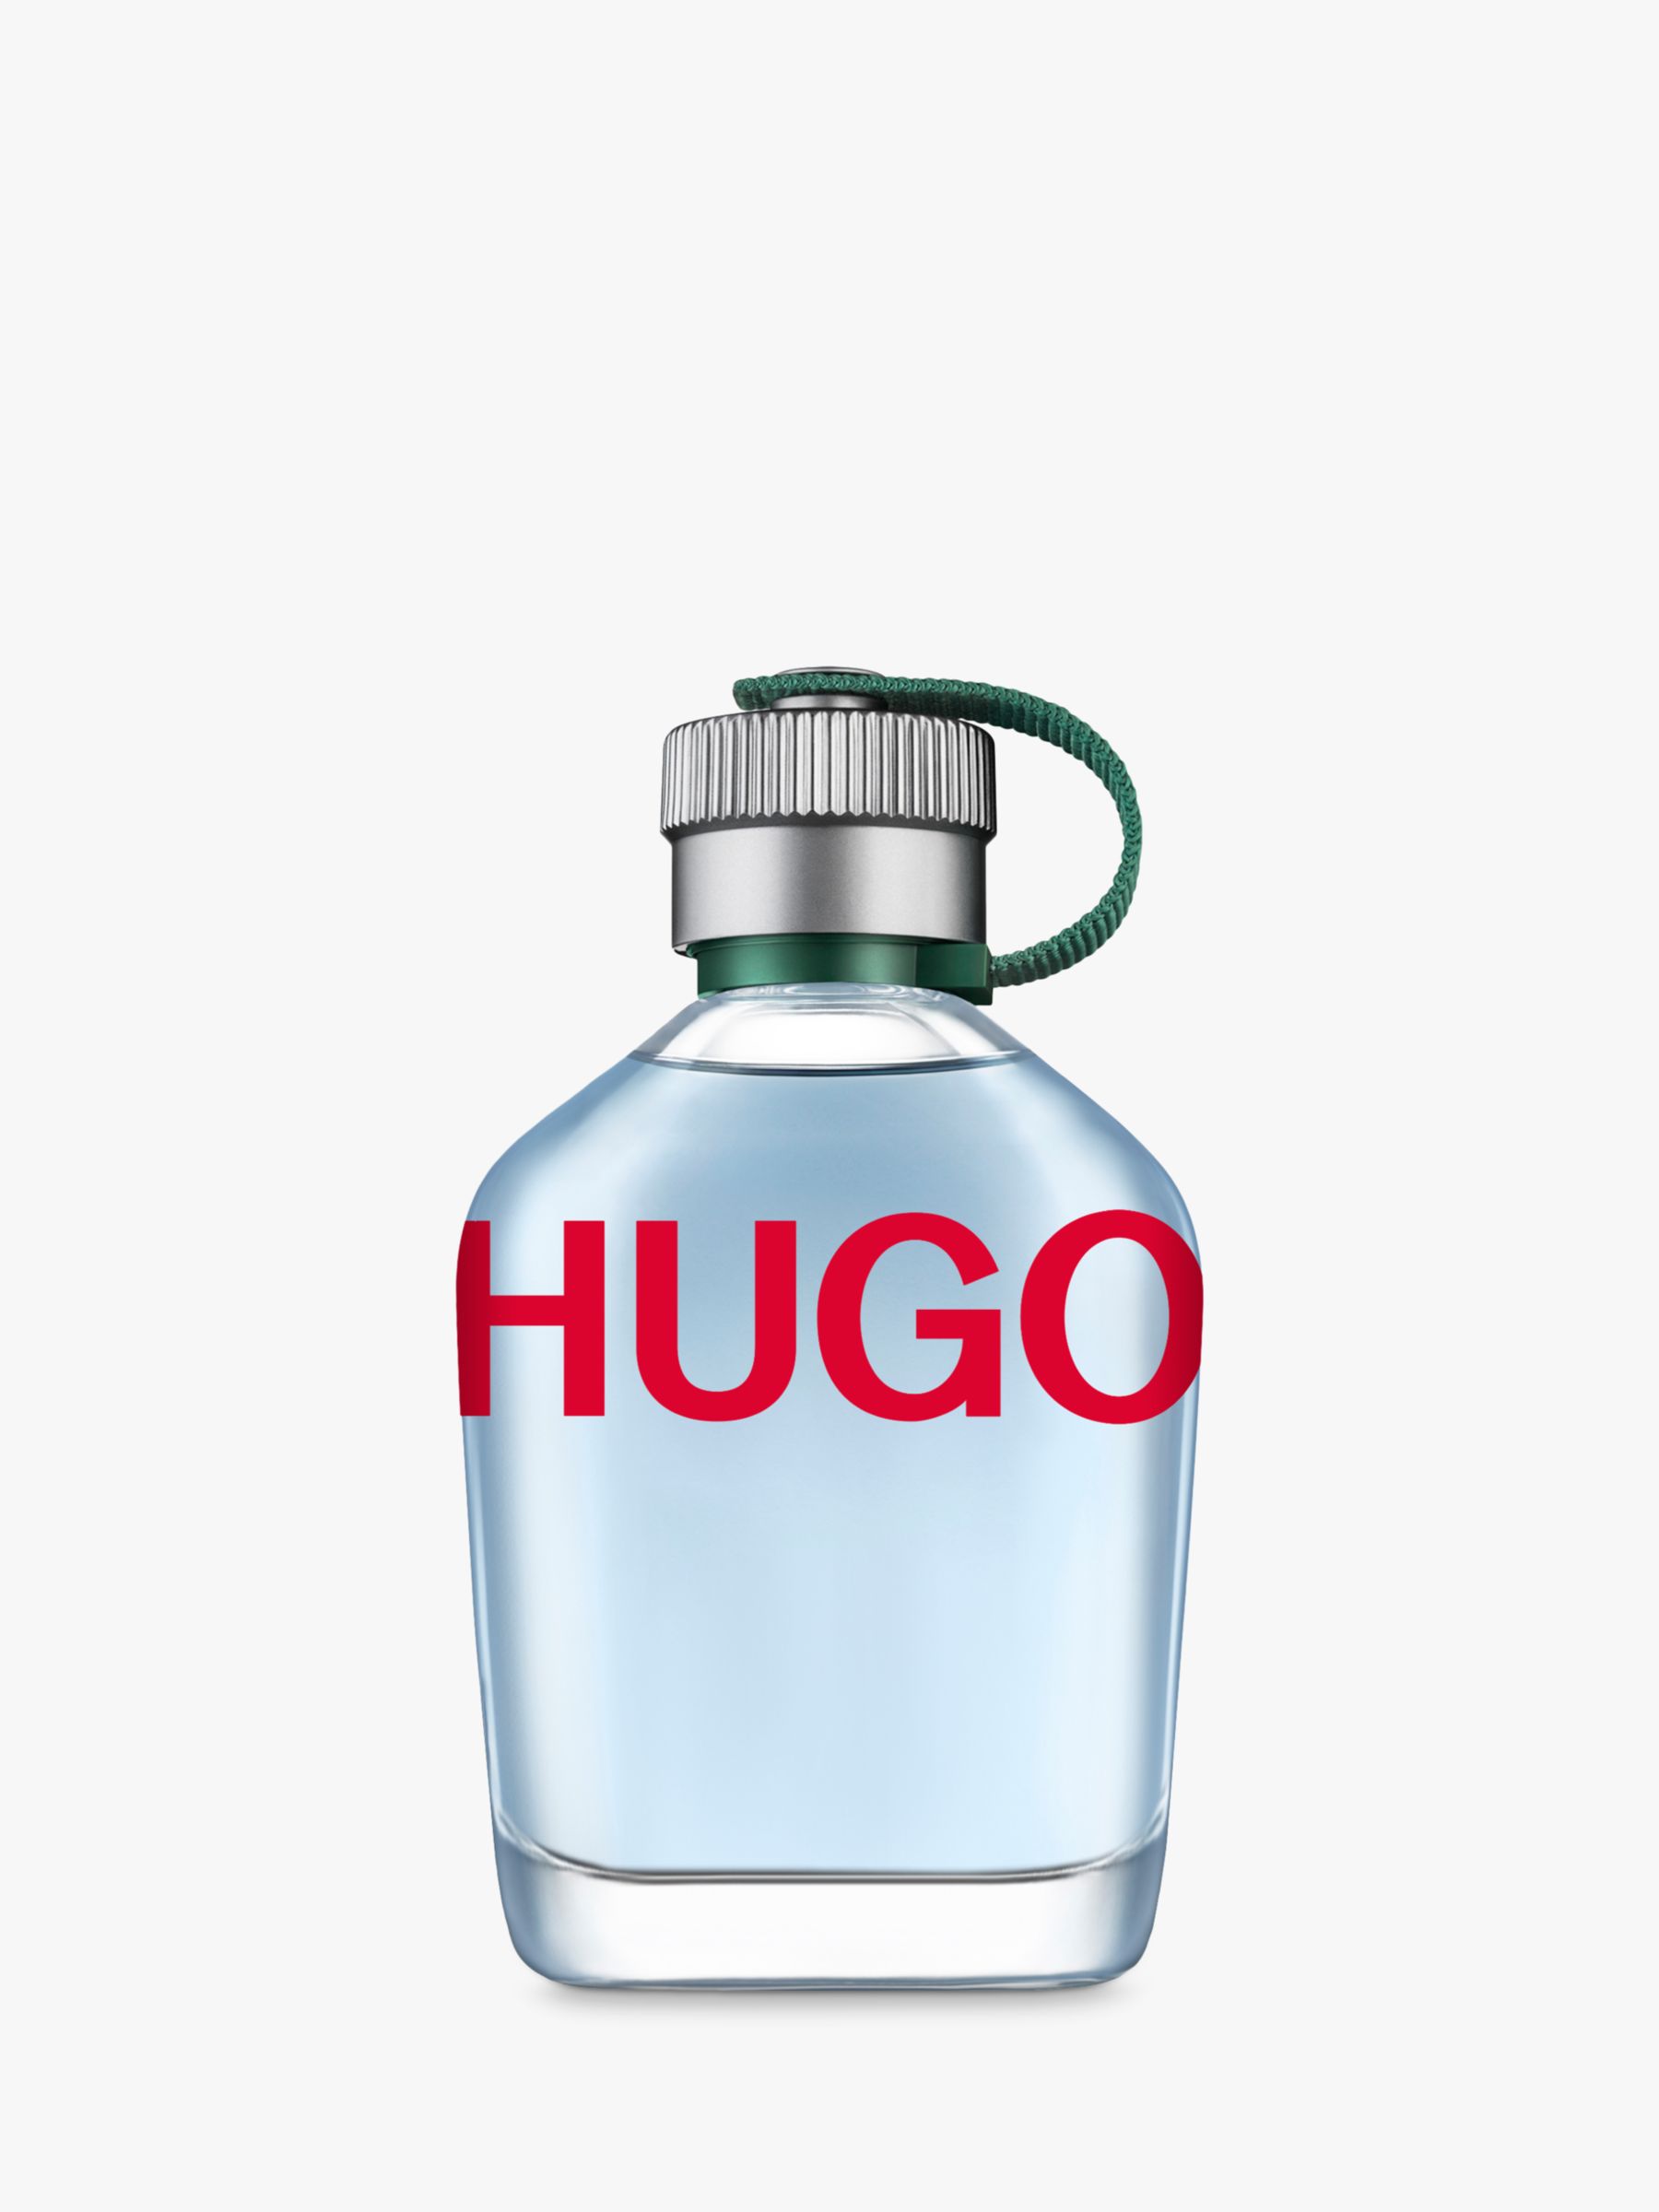 HUGO BOSS HUGO Man Eau de Toilette Spray, 125ml 1